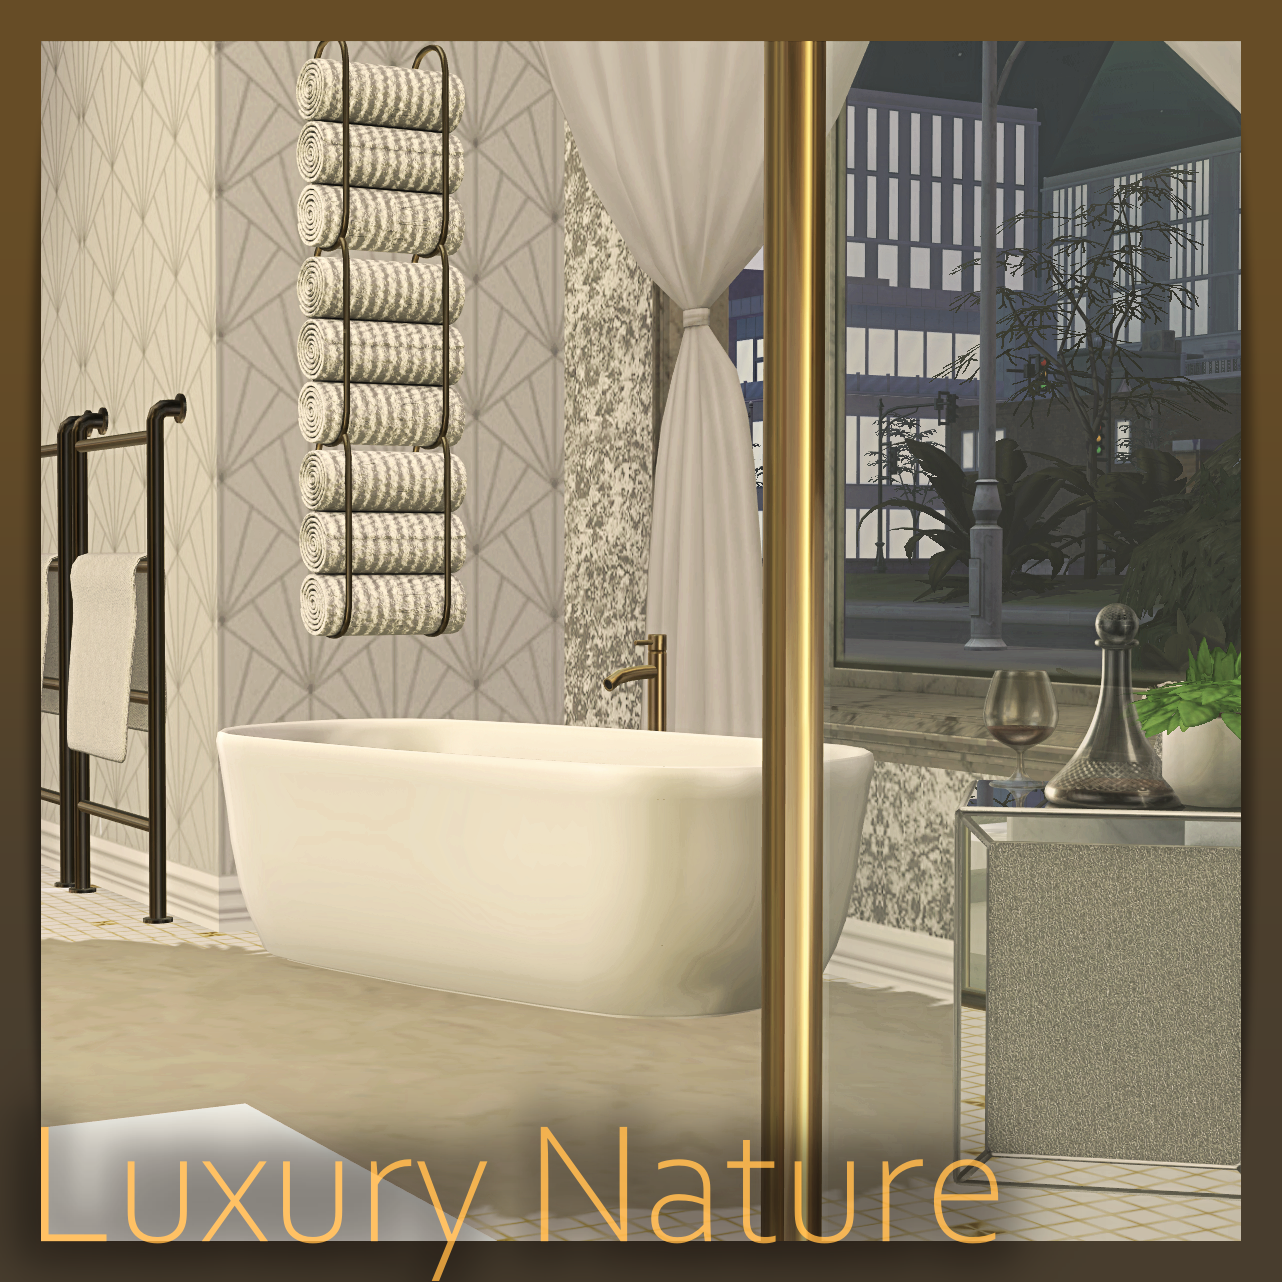 Luxury Nature project avatar